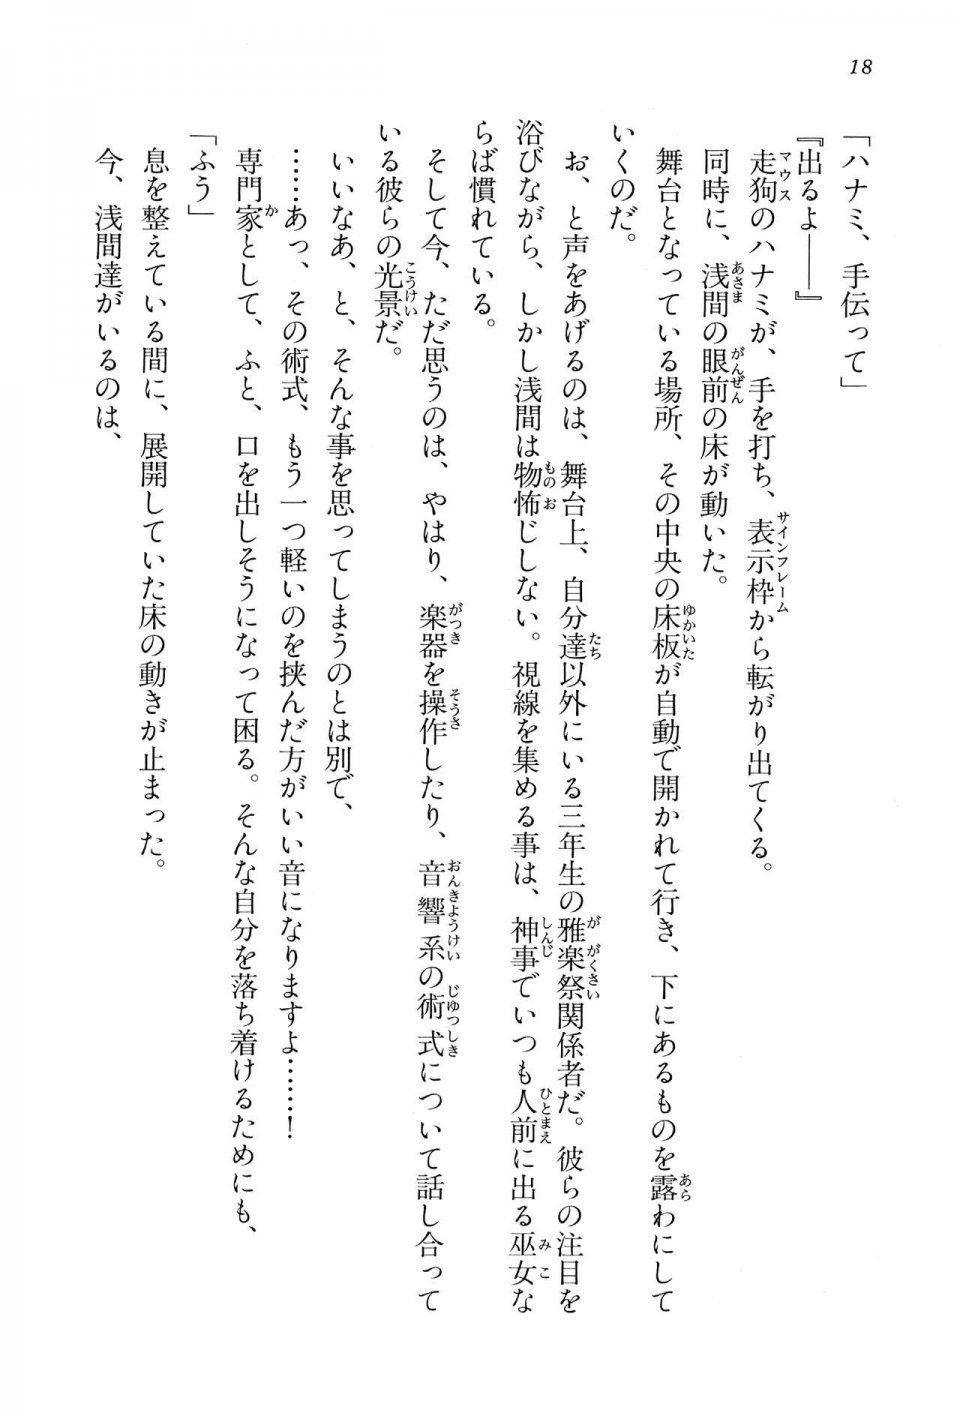 Kyoukai Senjou no Horizon BD Special Mininovel Vol 1(1A) - Photo #22